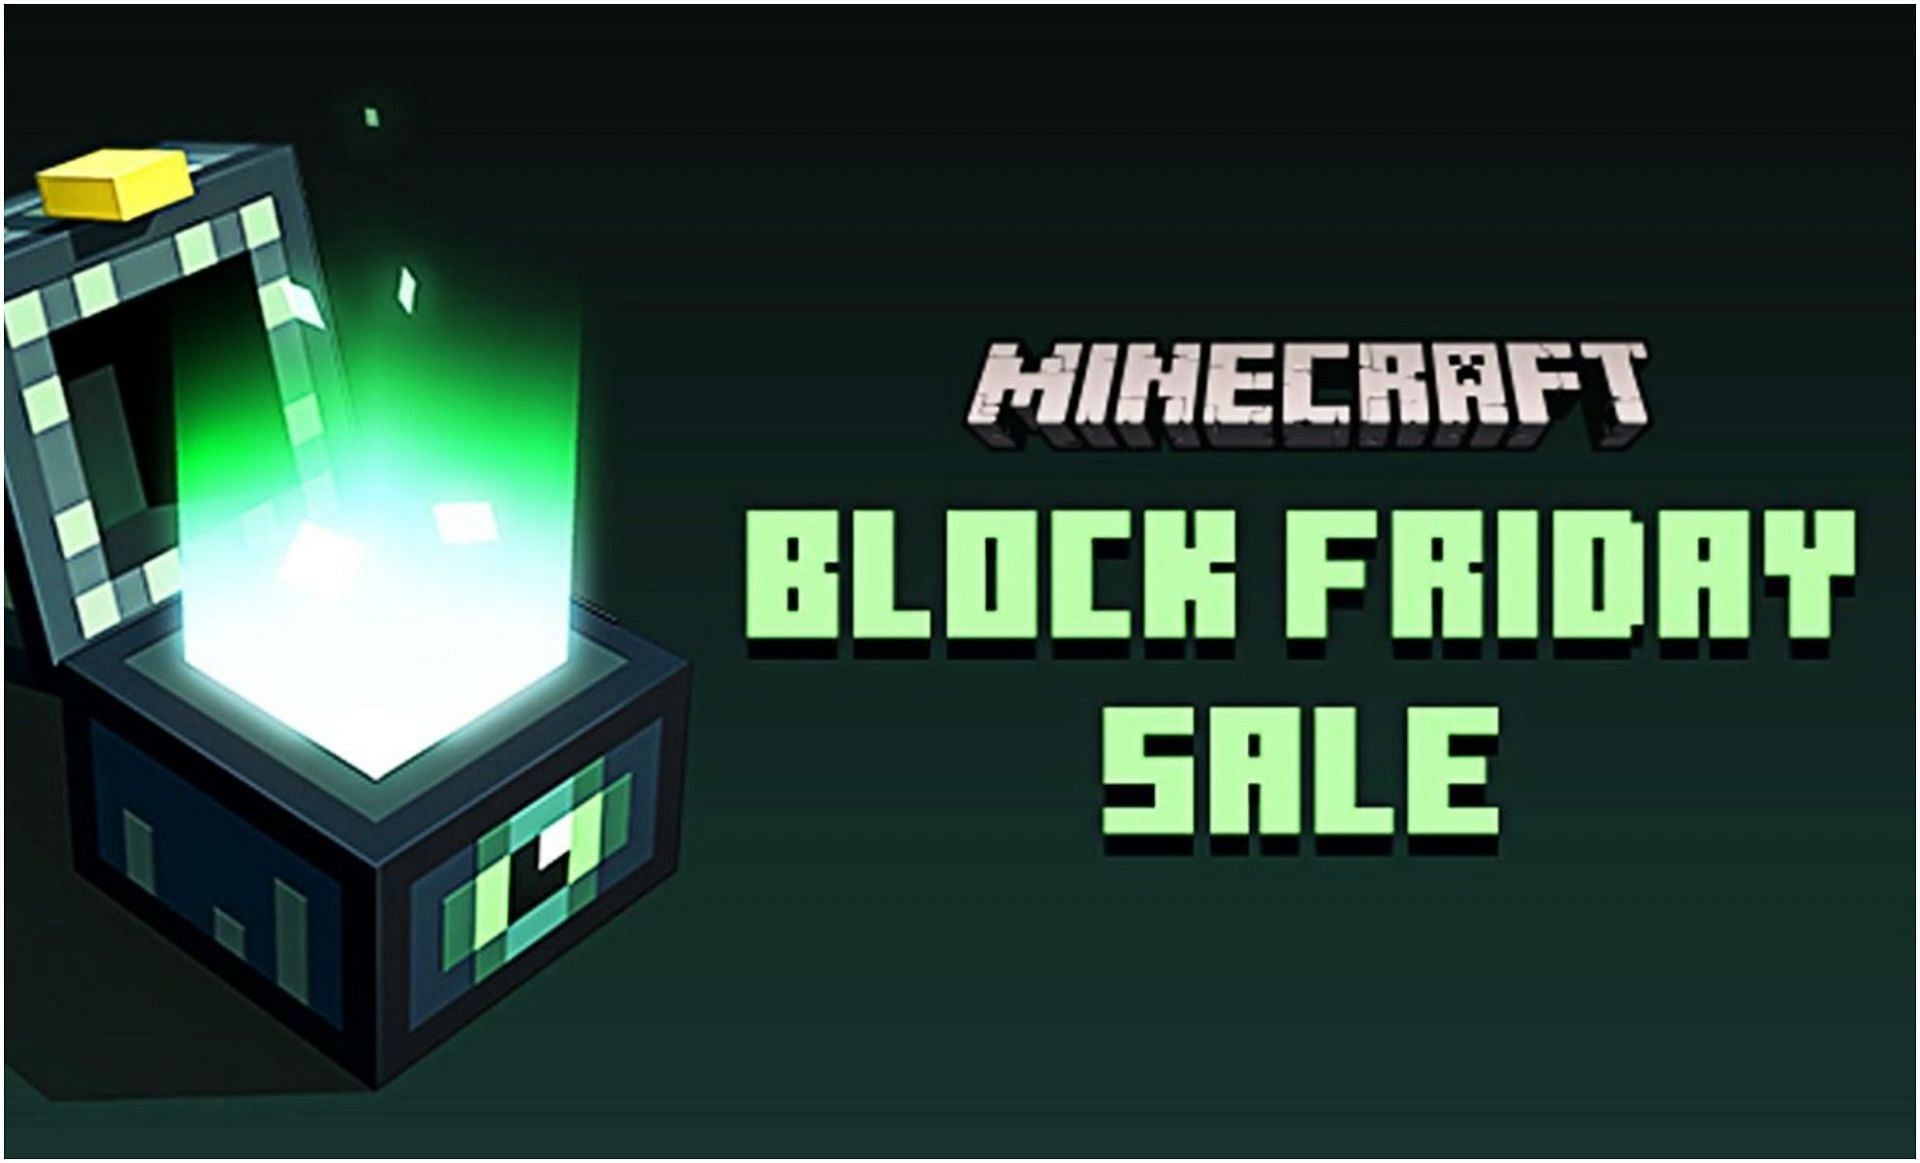 The Block Friday sale 2021 (Image via DigitNetics on YouTube)